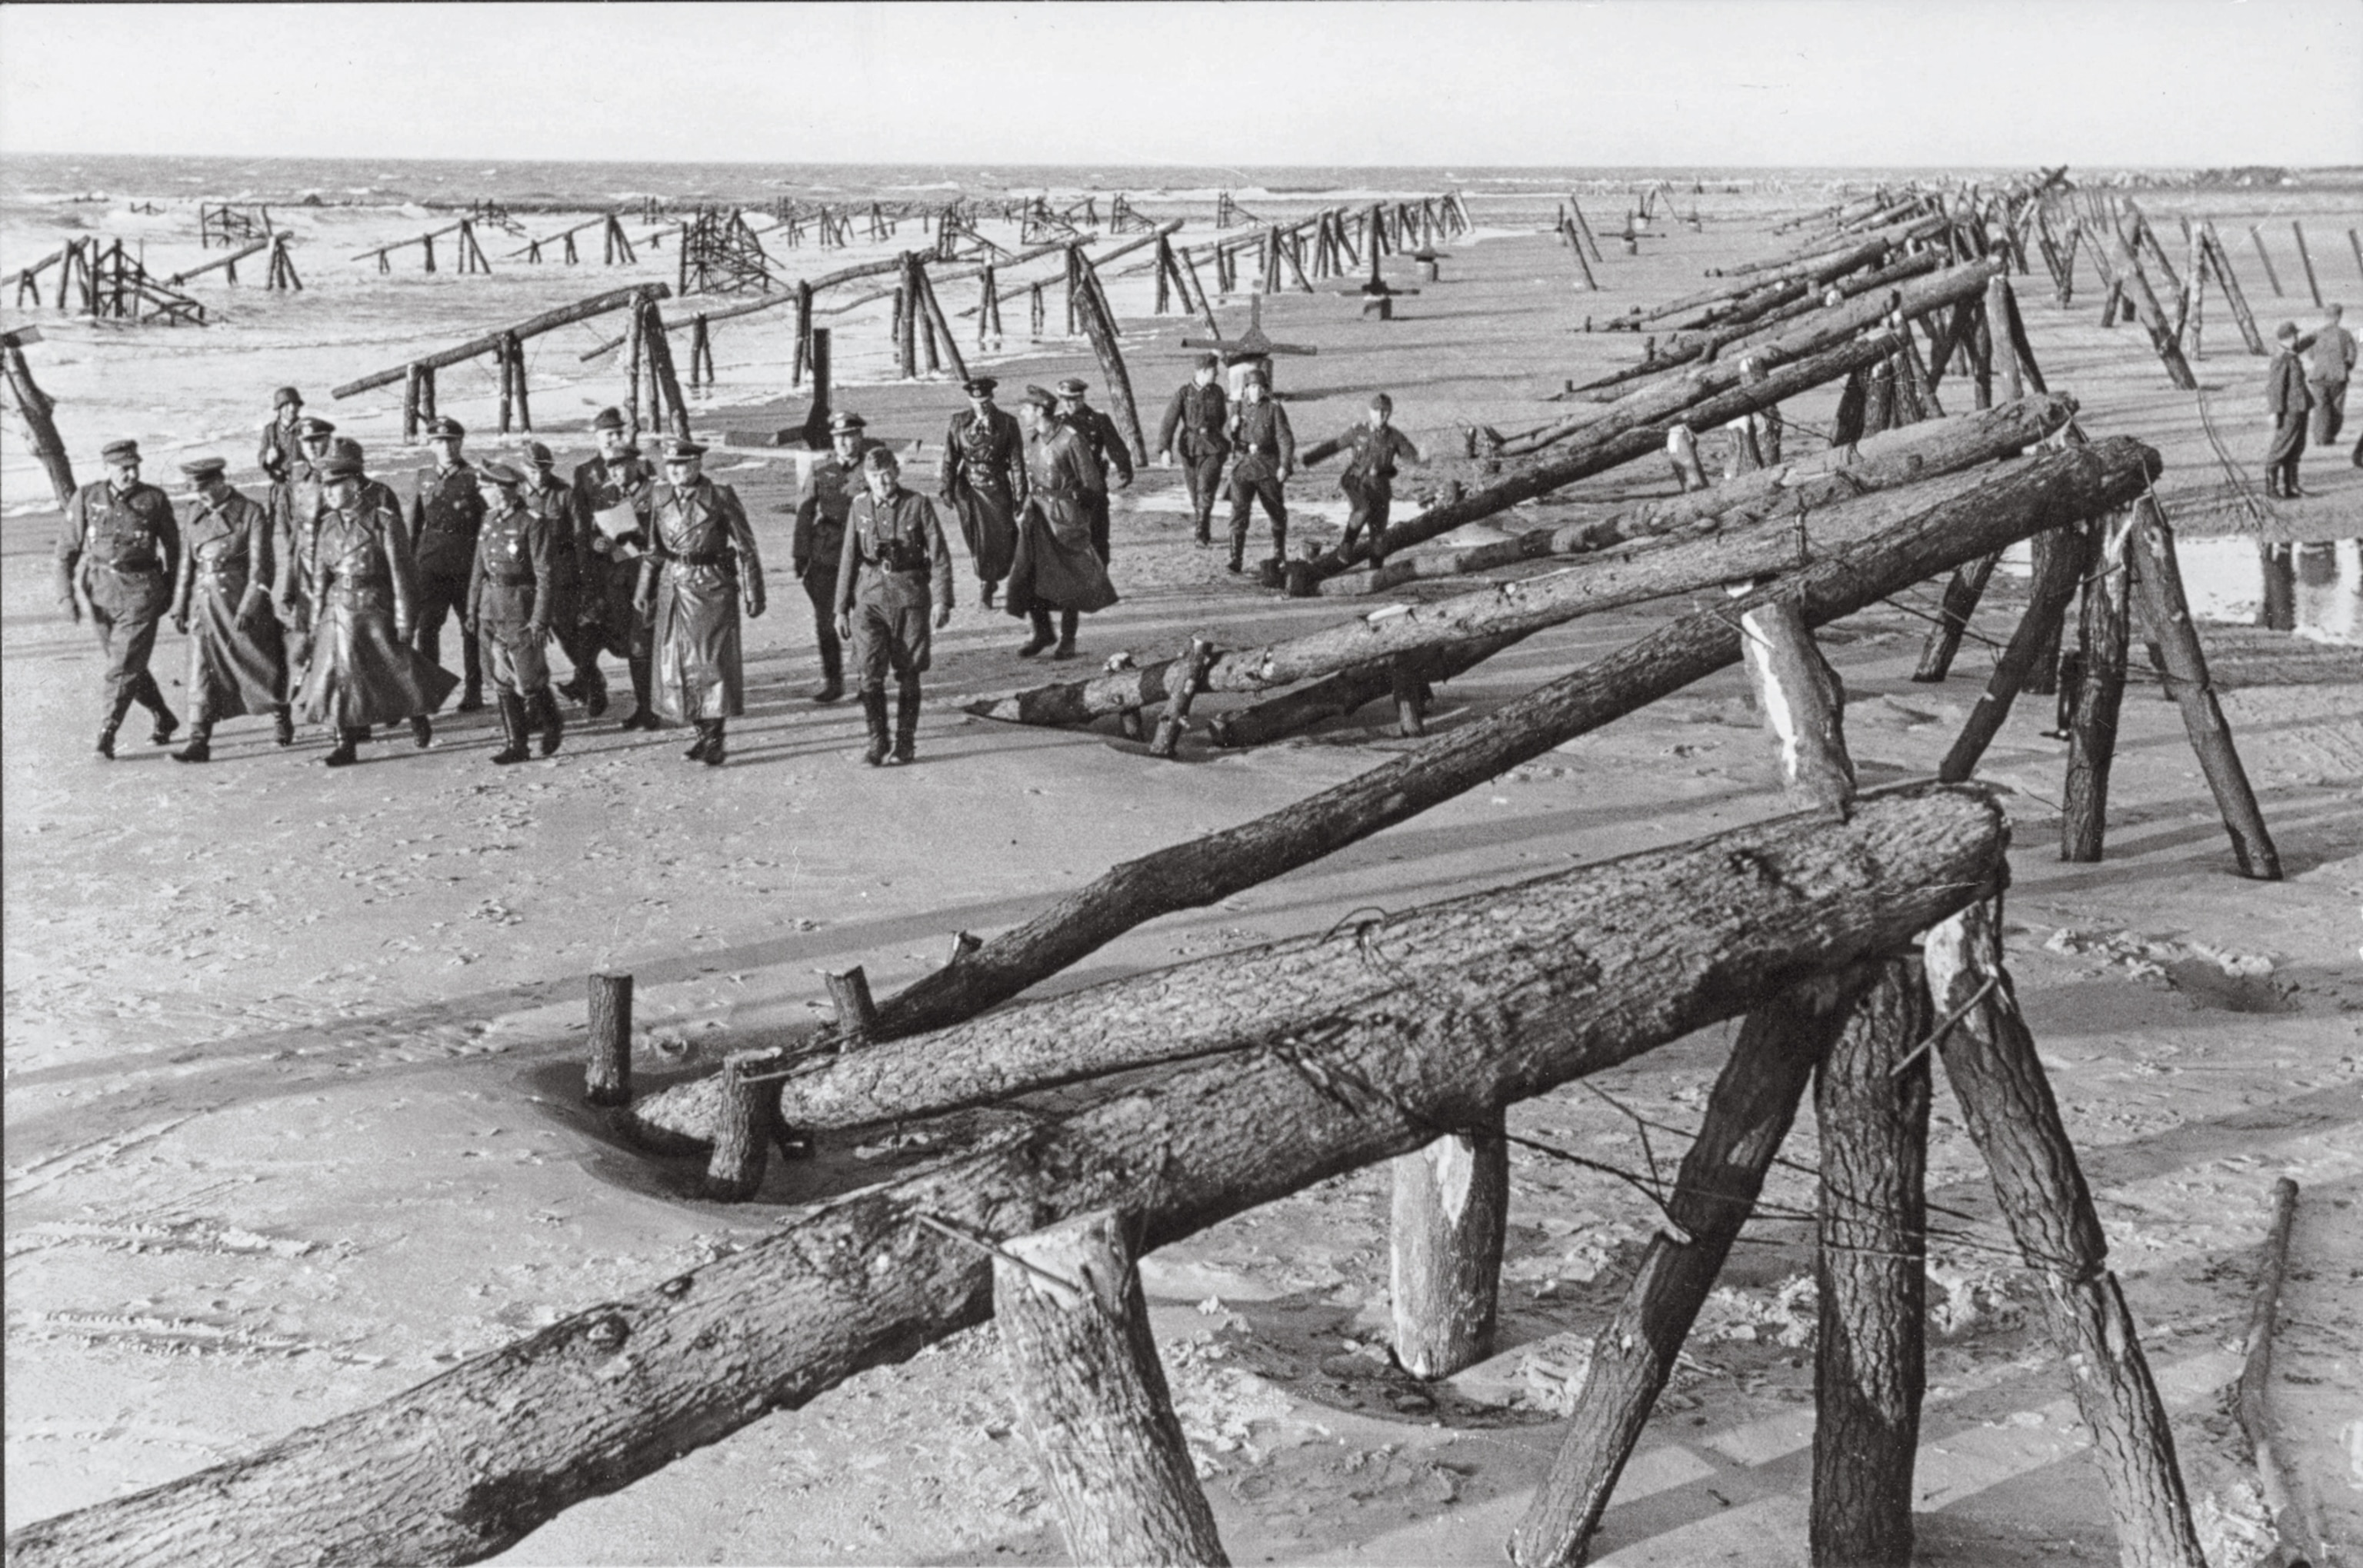 Rommel inspecting a beach near Calais in April 1944